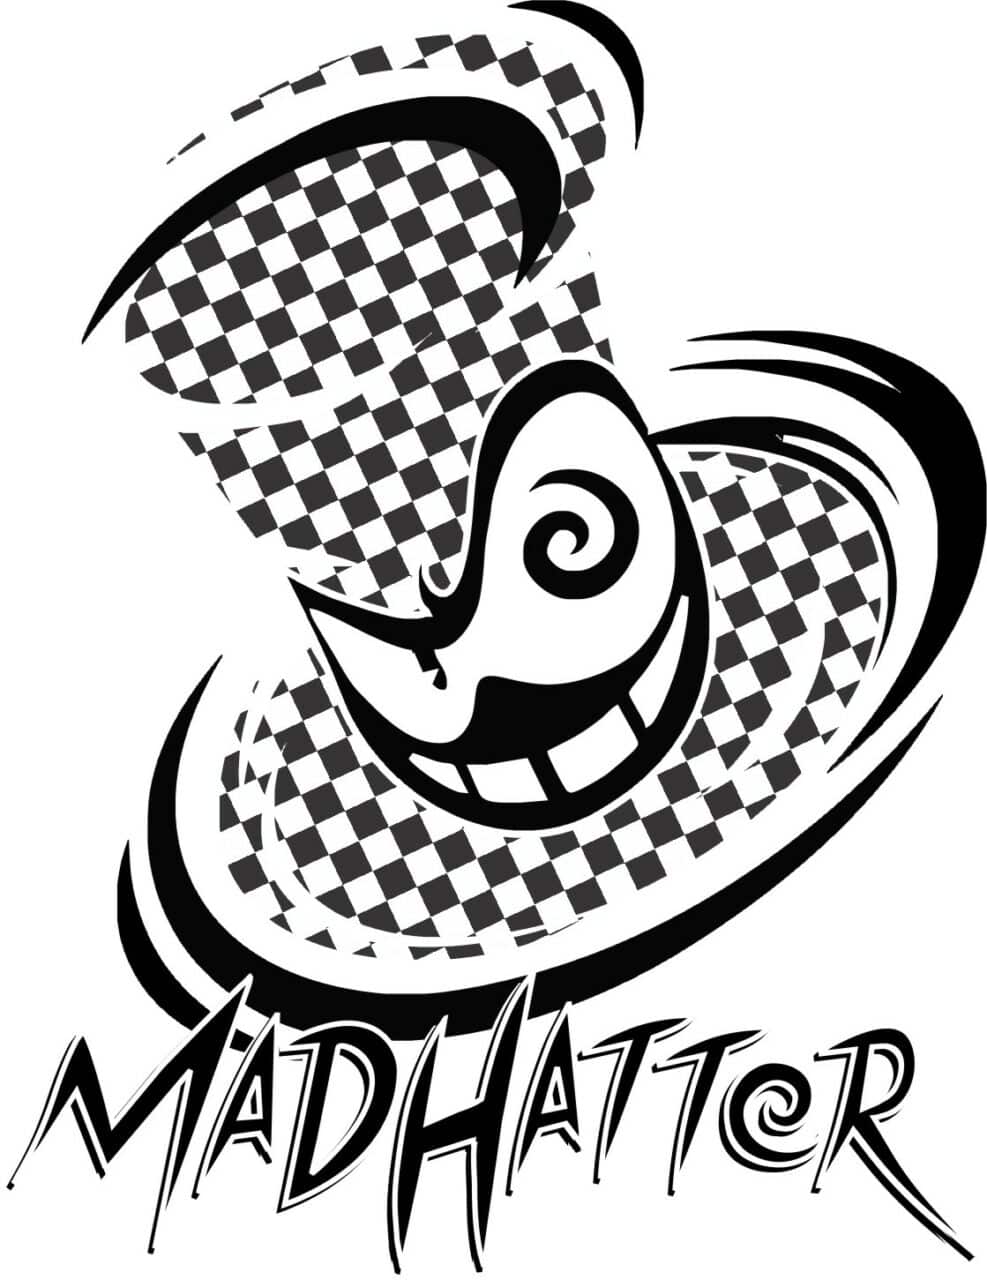 MadHatter Disc Golf